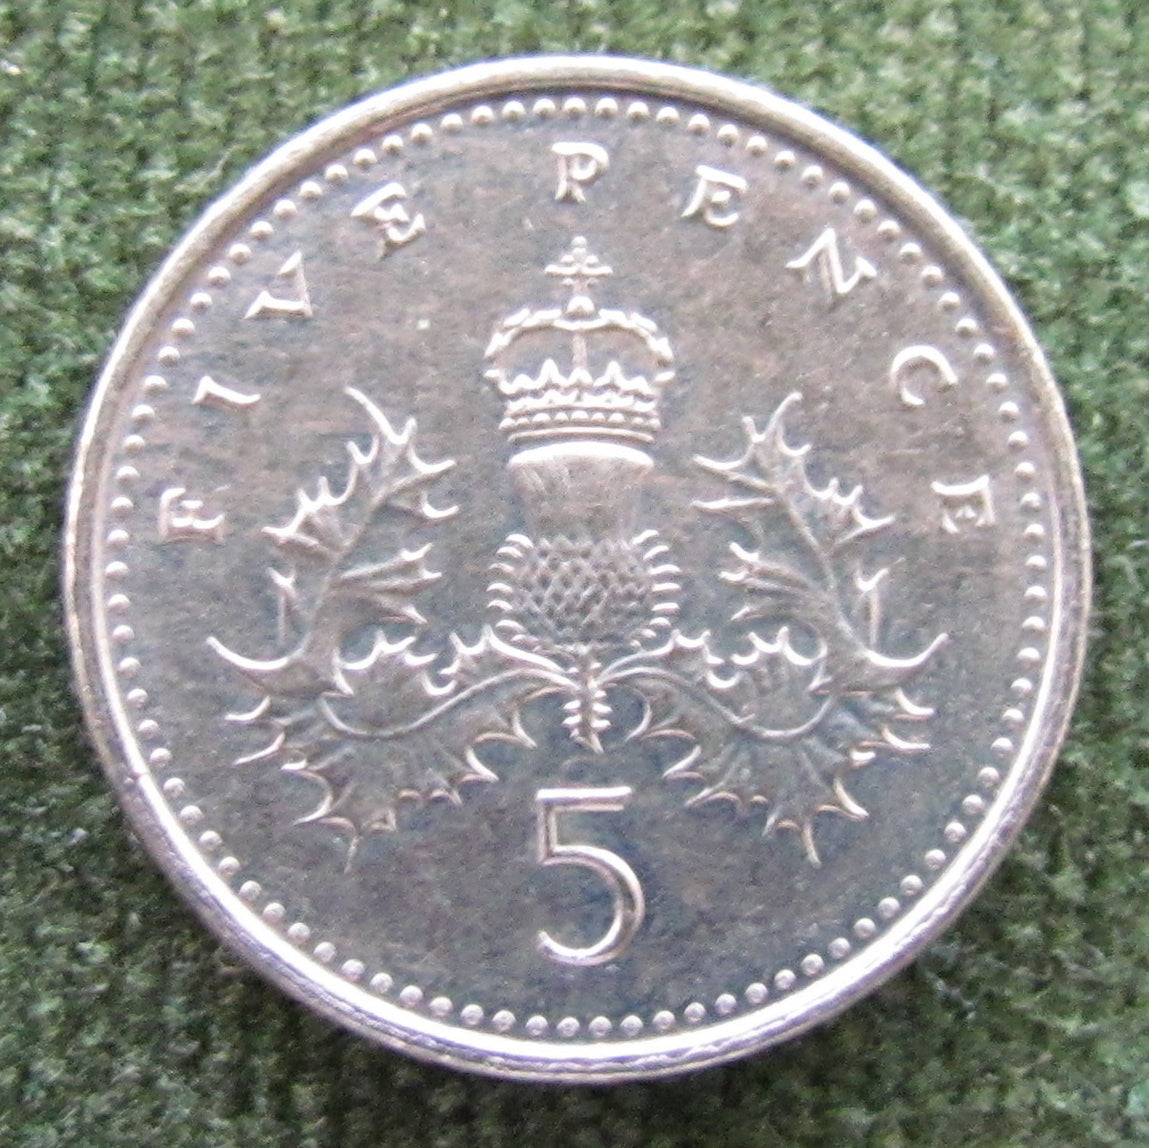 GB British UK English 1998 5 New Pence Queen Elizabeth II Coin